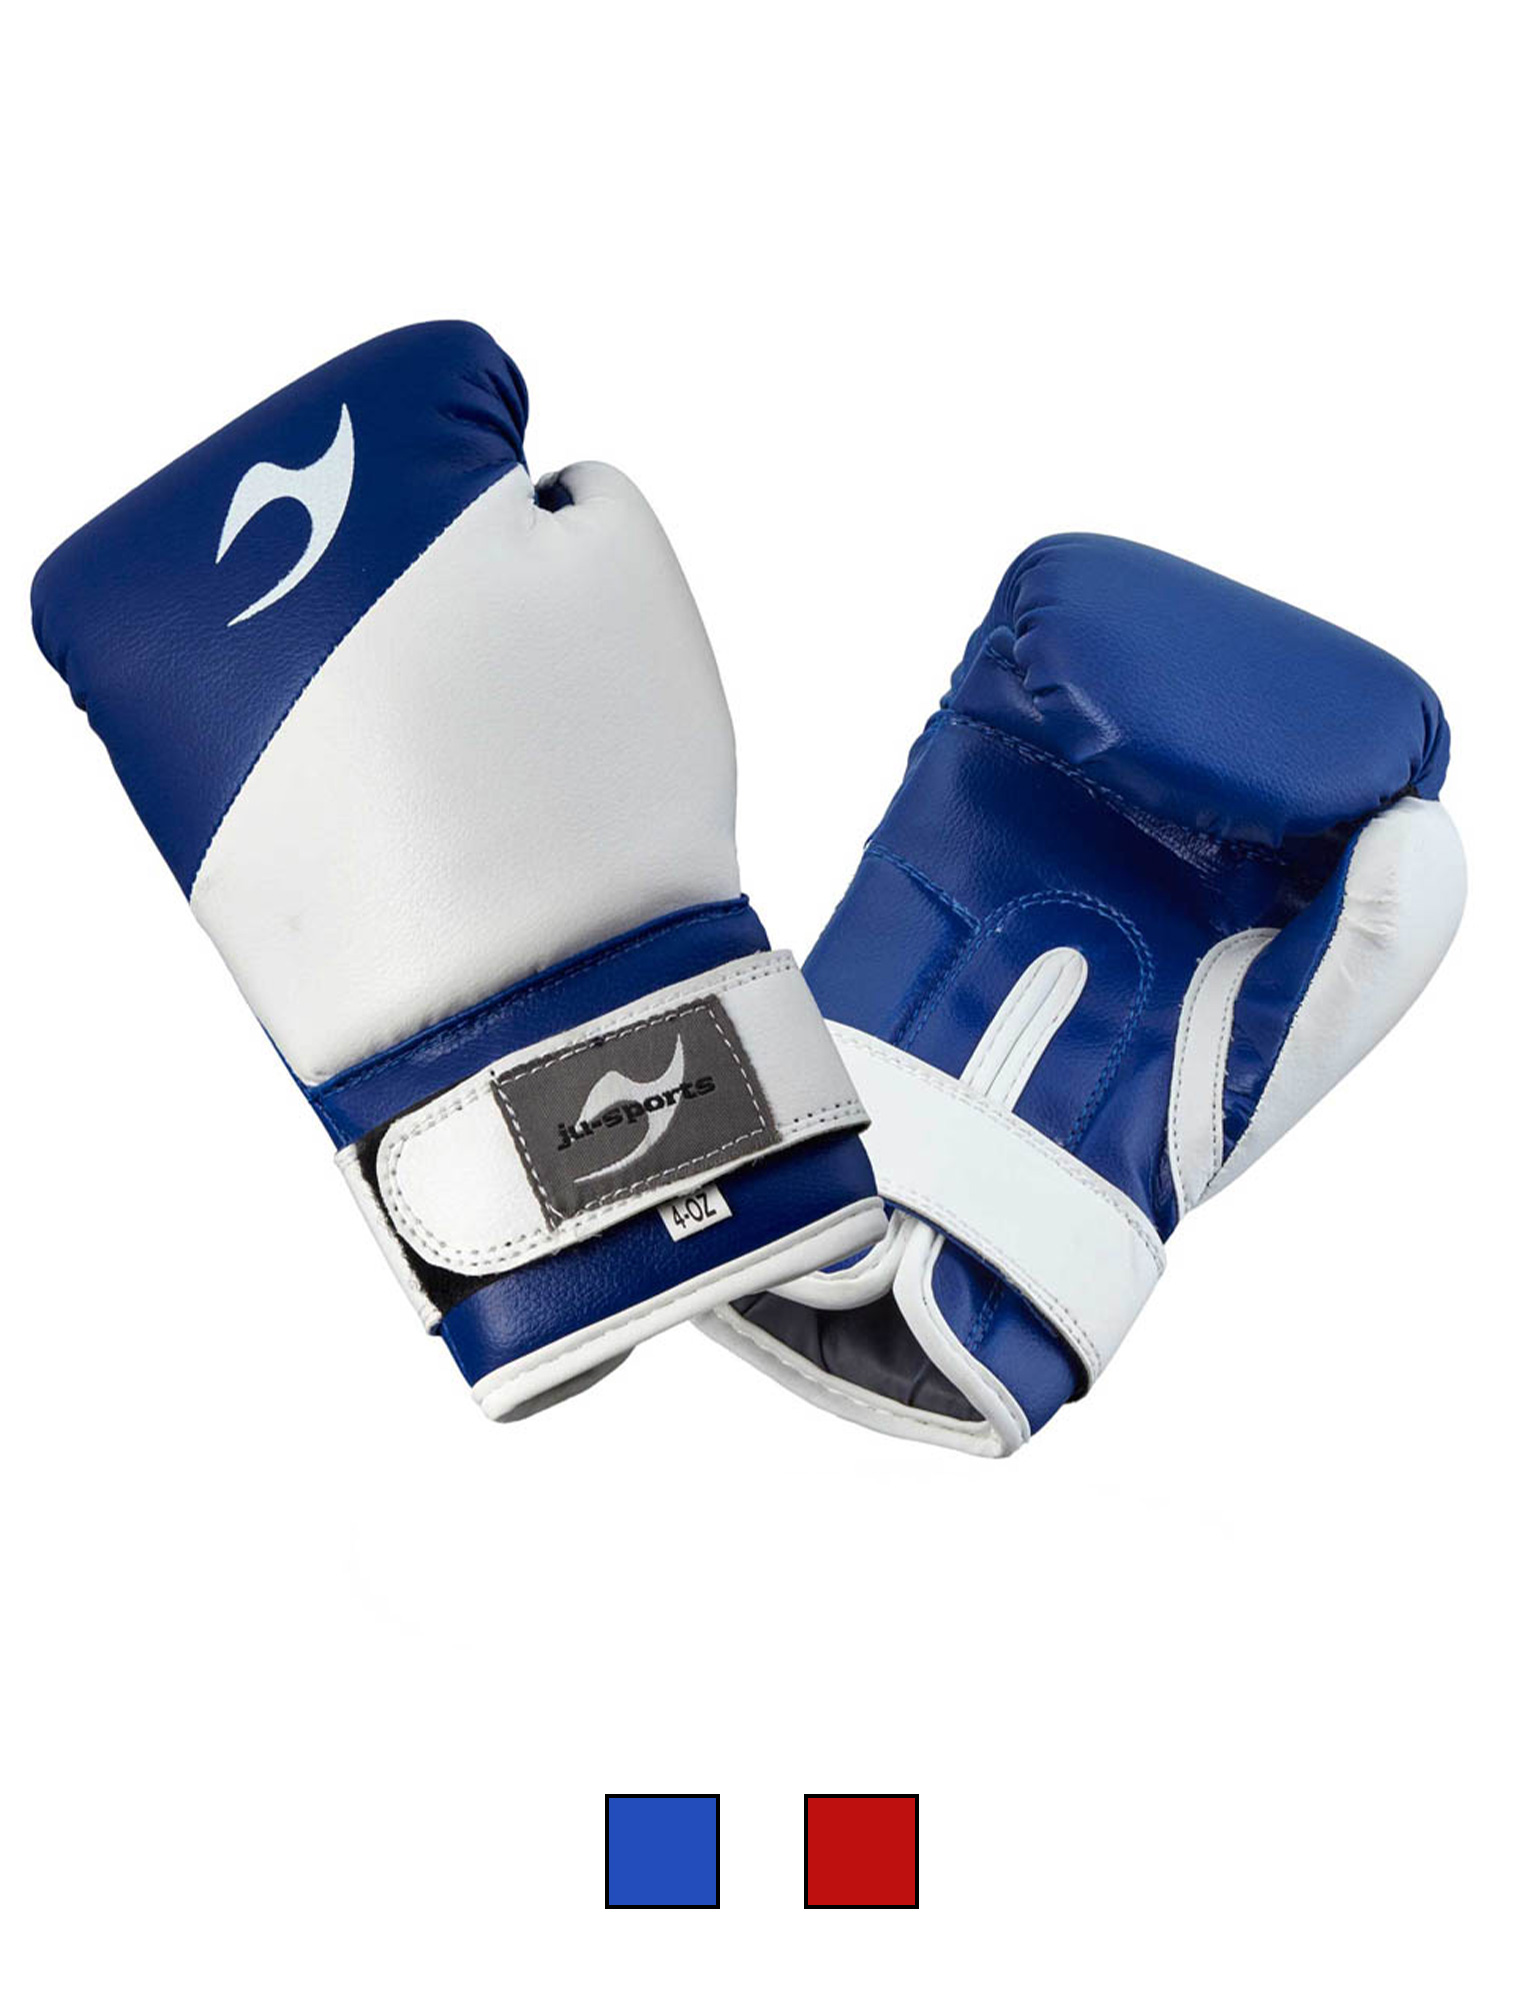 Ju-Sports Kids Boxing Gloves Bonsai blue